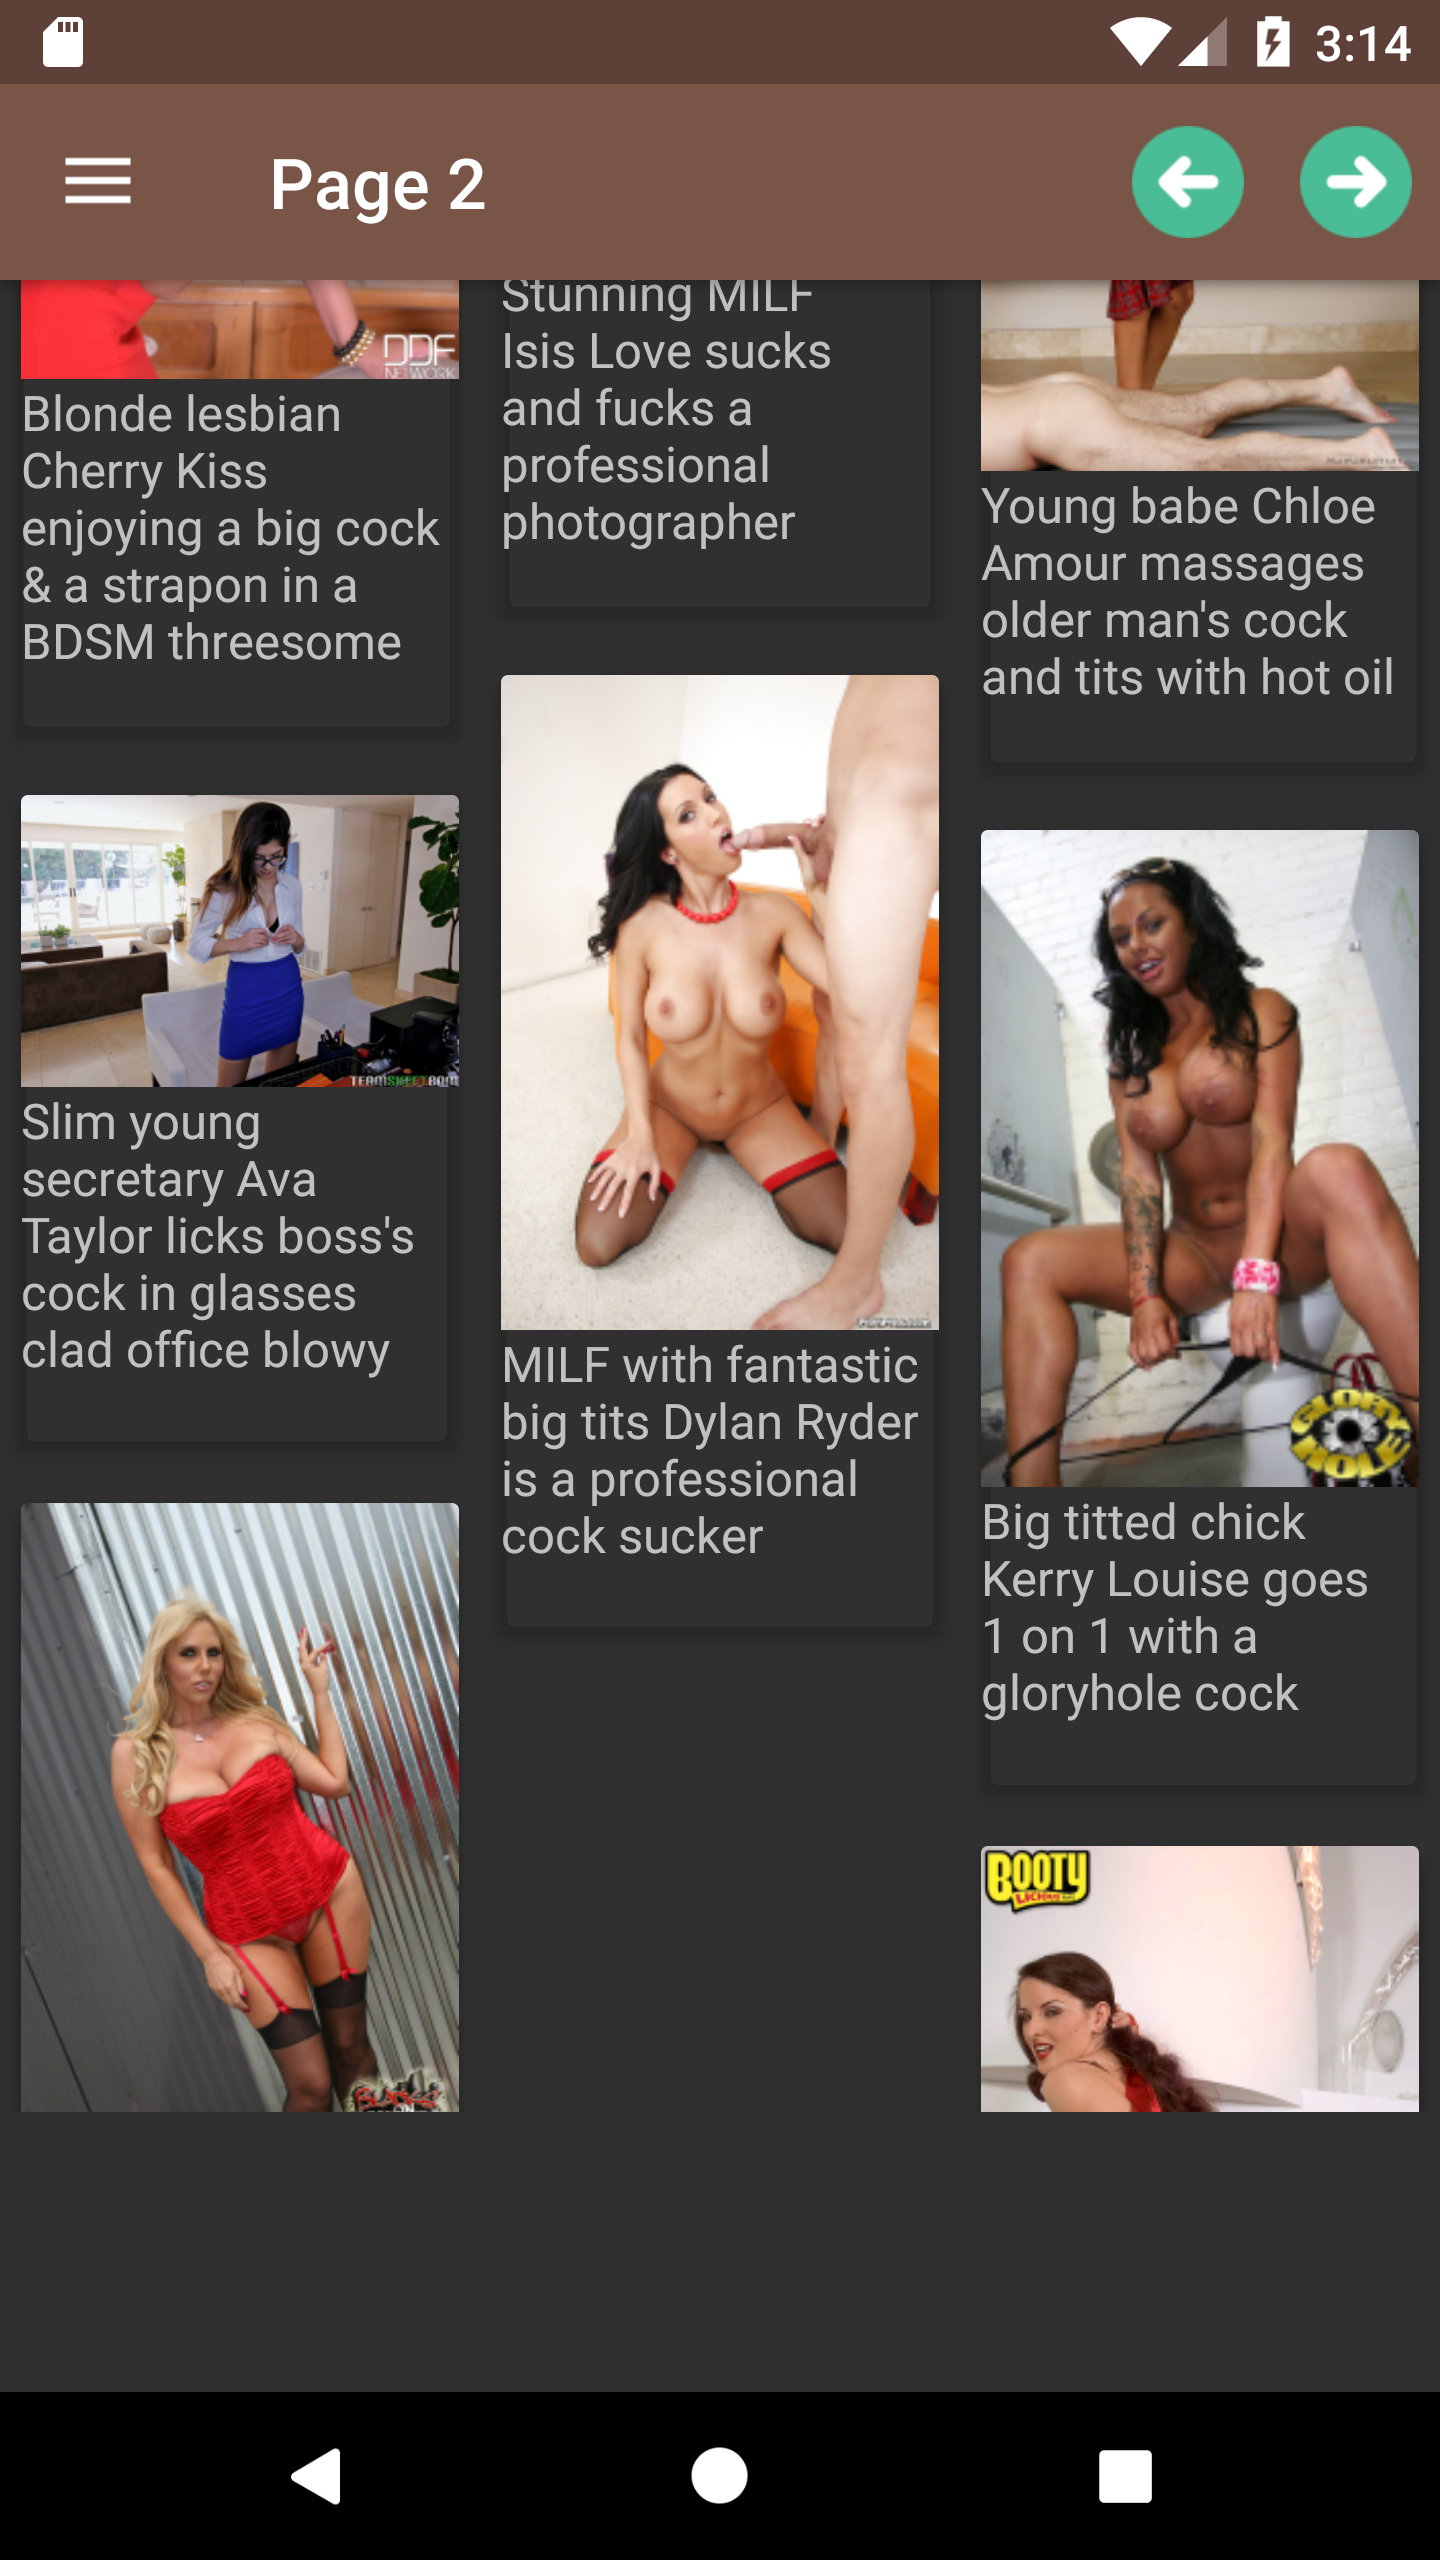 Big Cock hentai,gallery,sexy,puzzle,app,erotic,images,games,android,daily,download,pics,porn,galleries,pornstar,pornstars,wallpaper,hot,futanari